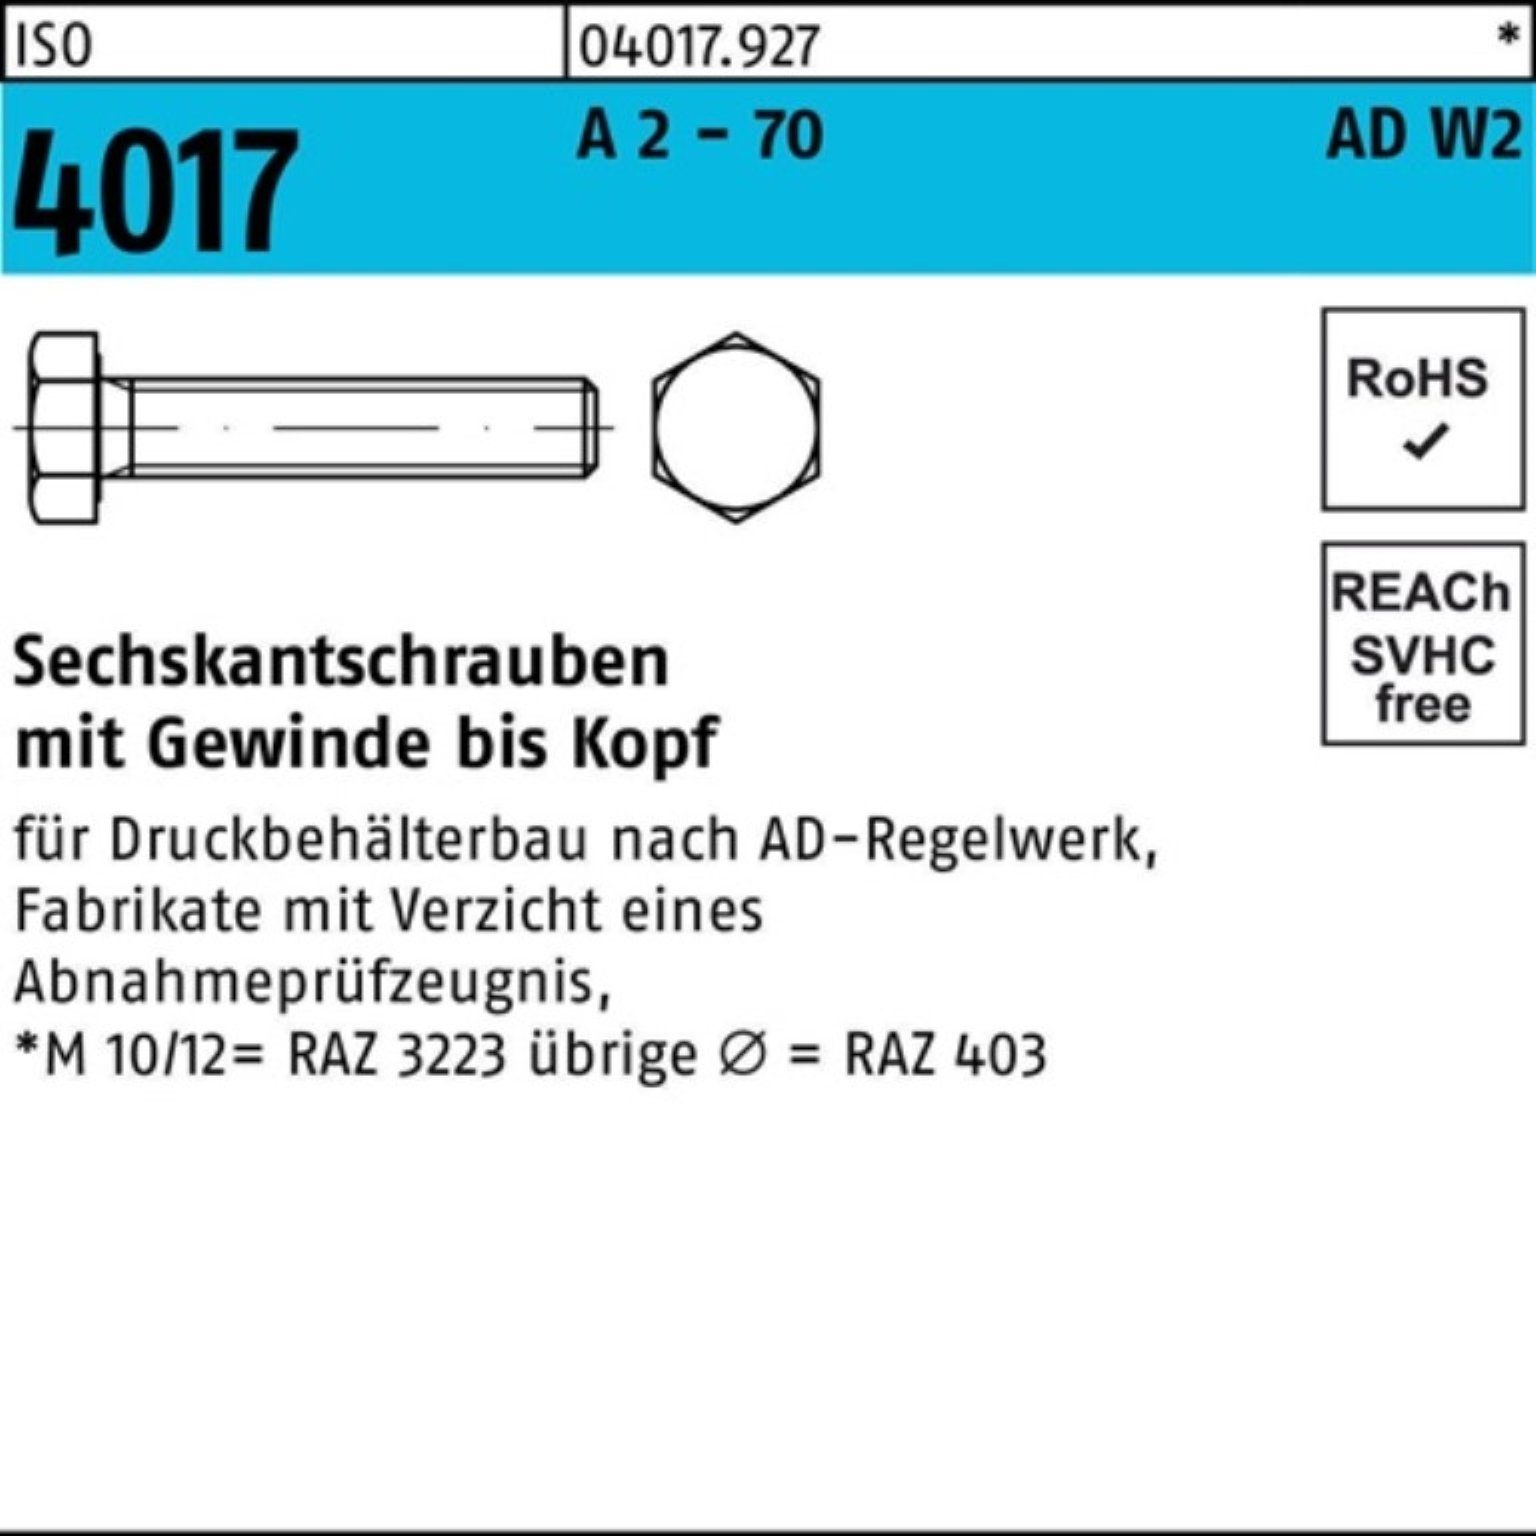 VG Sechskantschraube Sechskantschraube St - 2 100er 70 Bufab M10x 35 4017 100 ISO A Pack AD-W2